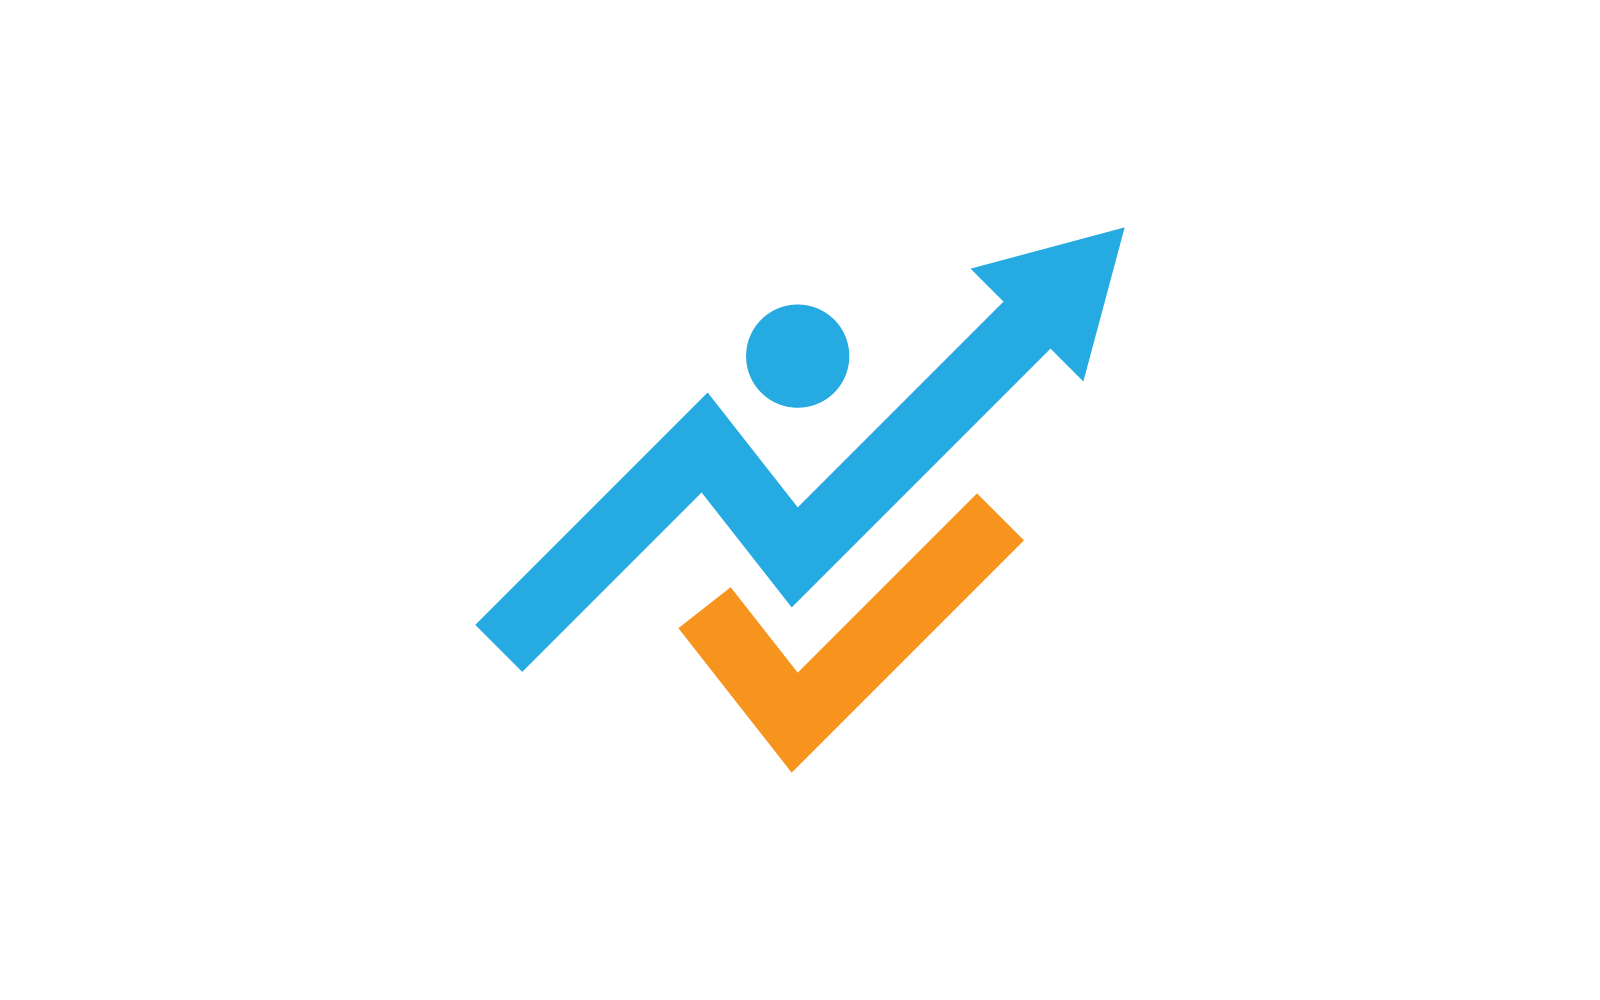 Business finance arrow logo icon vector template